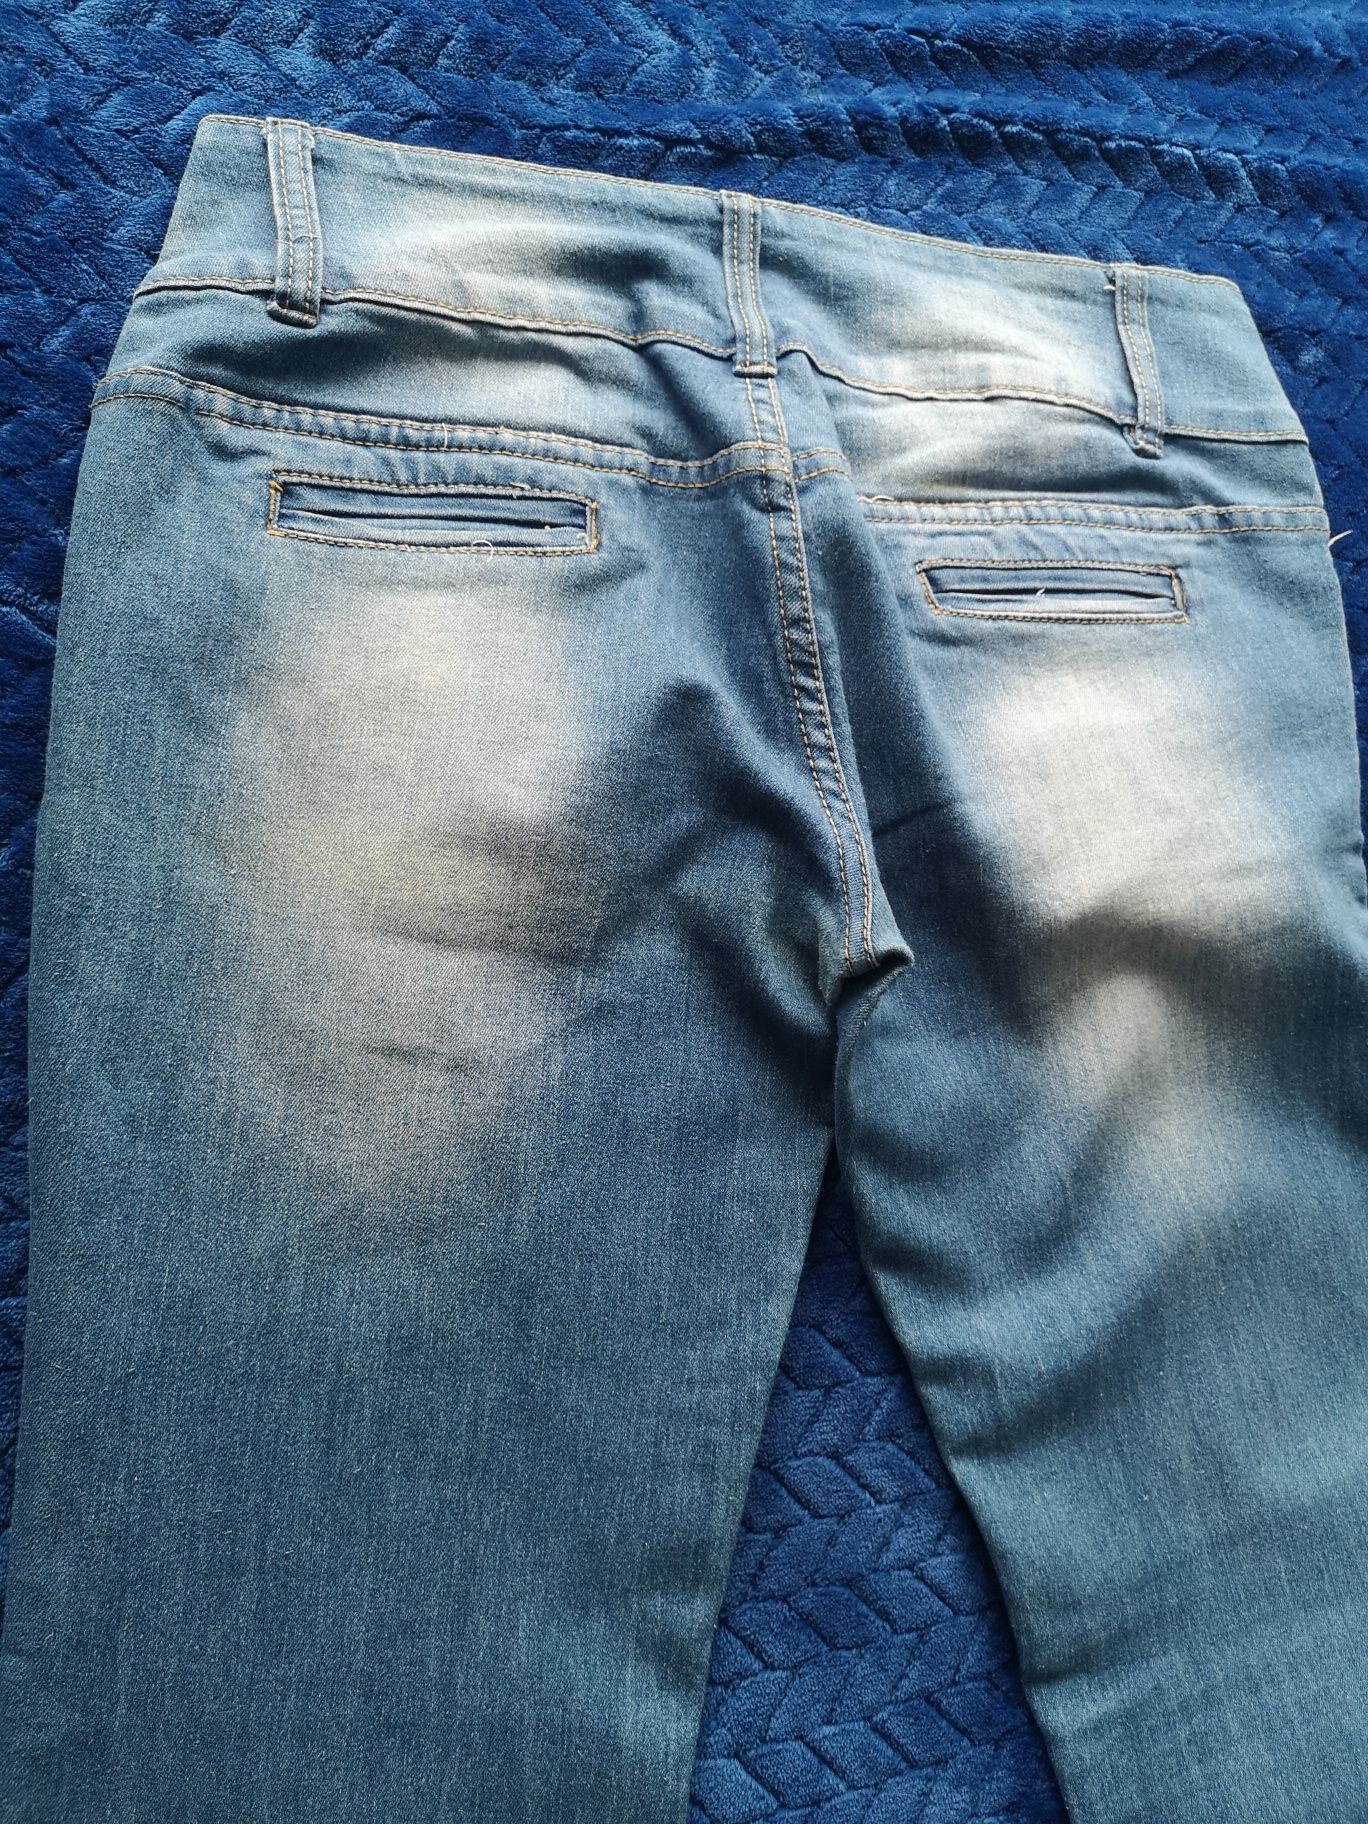 Spodnie damskie jeansy XL r. 42